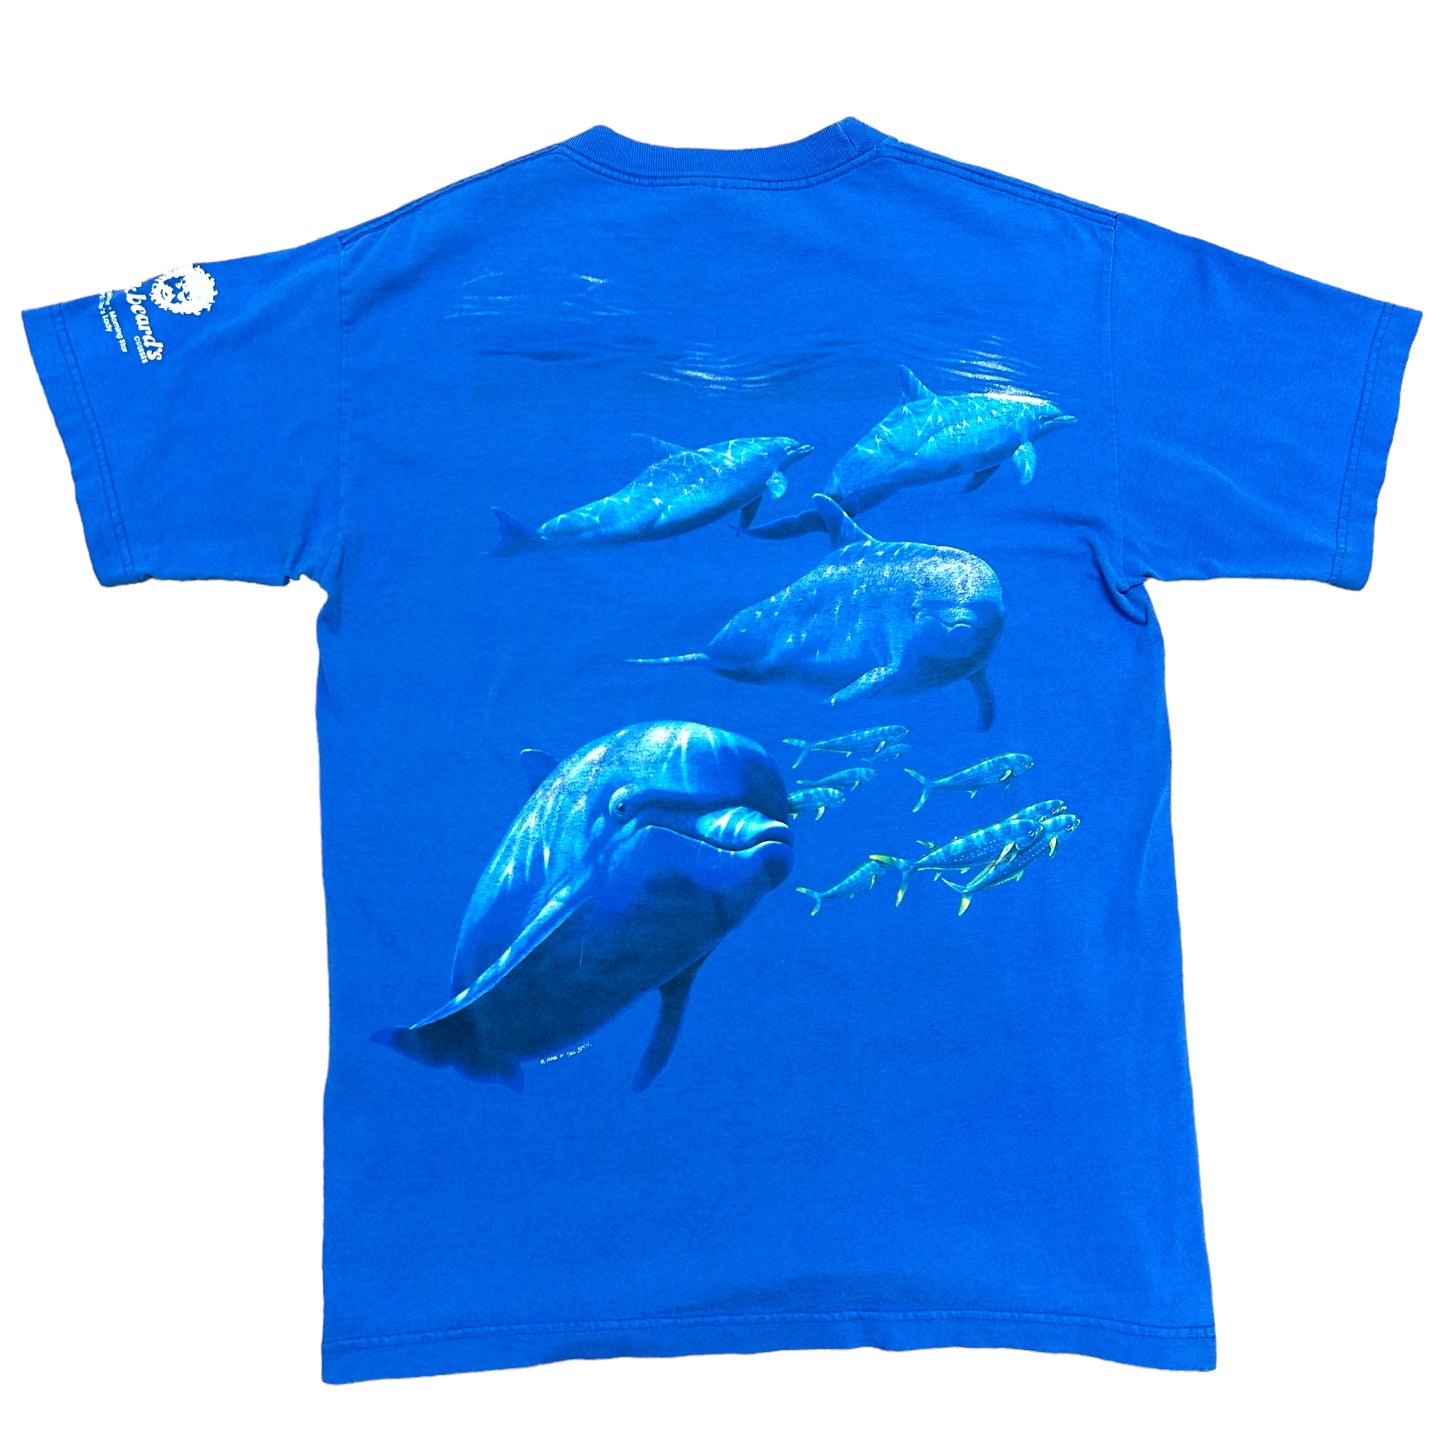 Vintage 1990s Blackbeard’s Cruises Blue Dolphins Wildlife Graphic T-Shirt - Size Large